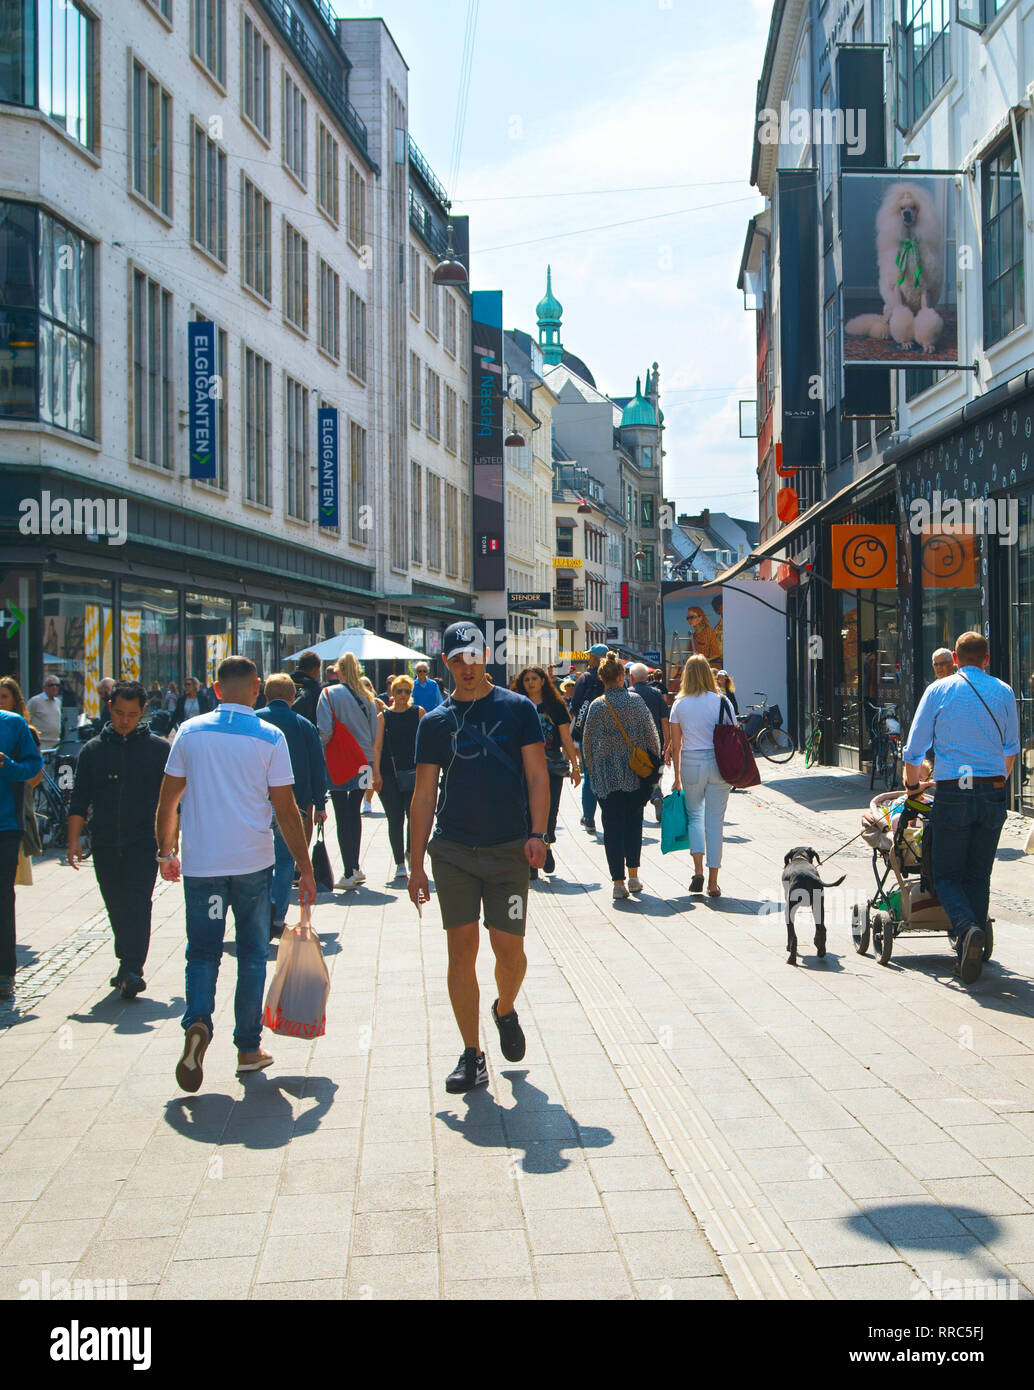 COPENHAGEN, DENMARK - JUNE 14, 2018: People at Stroget street - Copenhagen central shopping street. Copenhagen is the capital of Denmark. Stock Photo